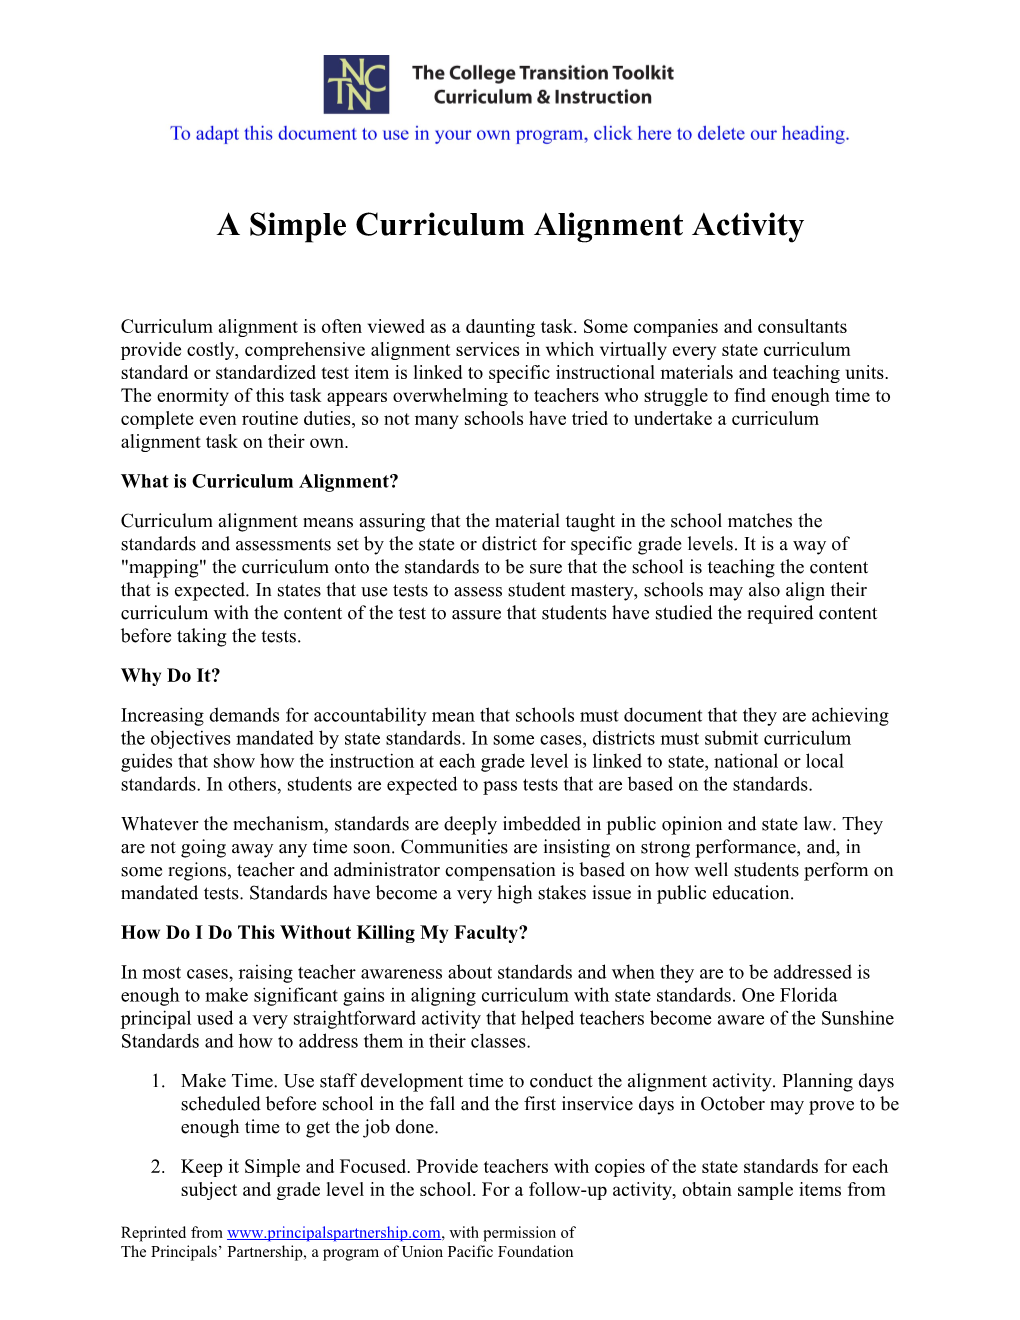 A Simple Curriculum Alignment Activity